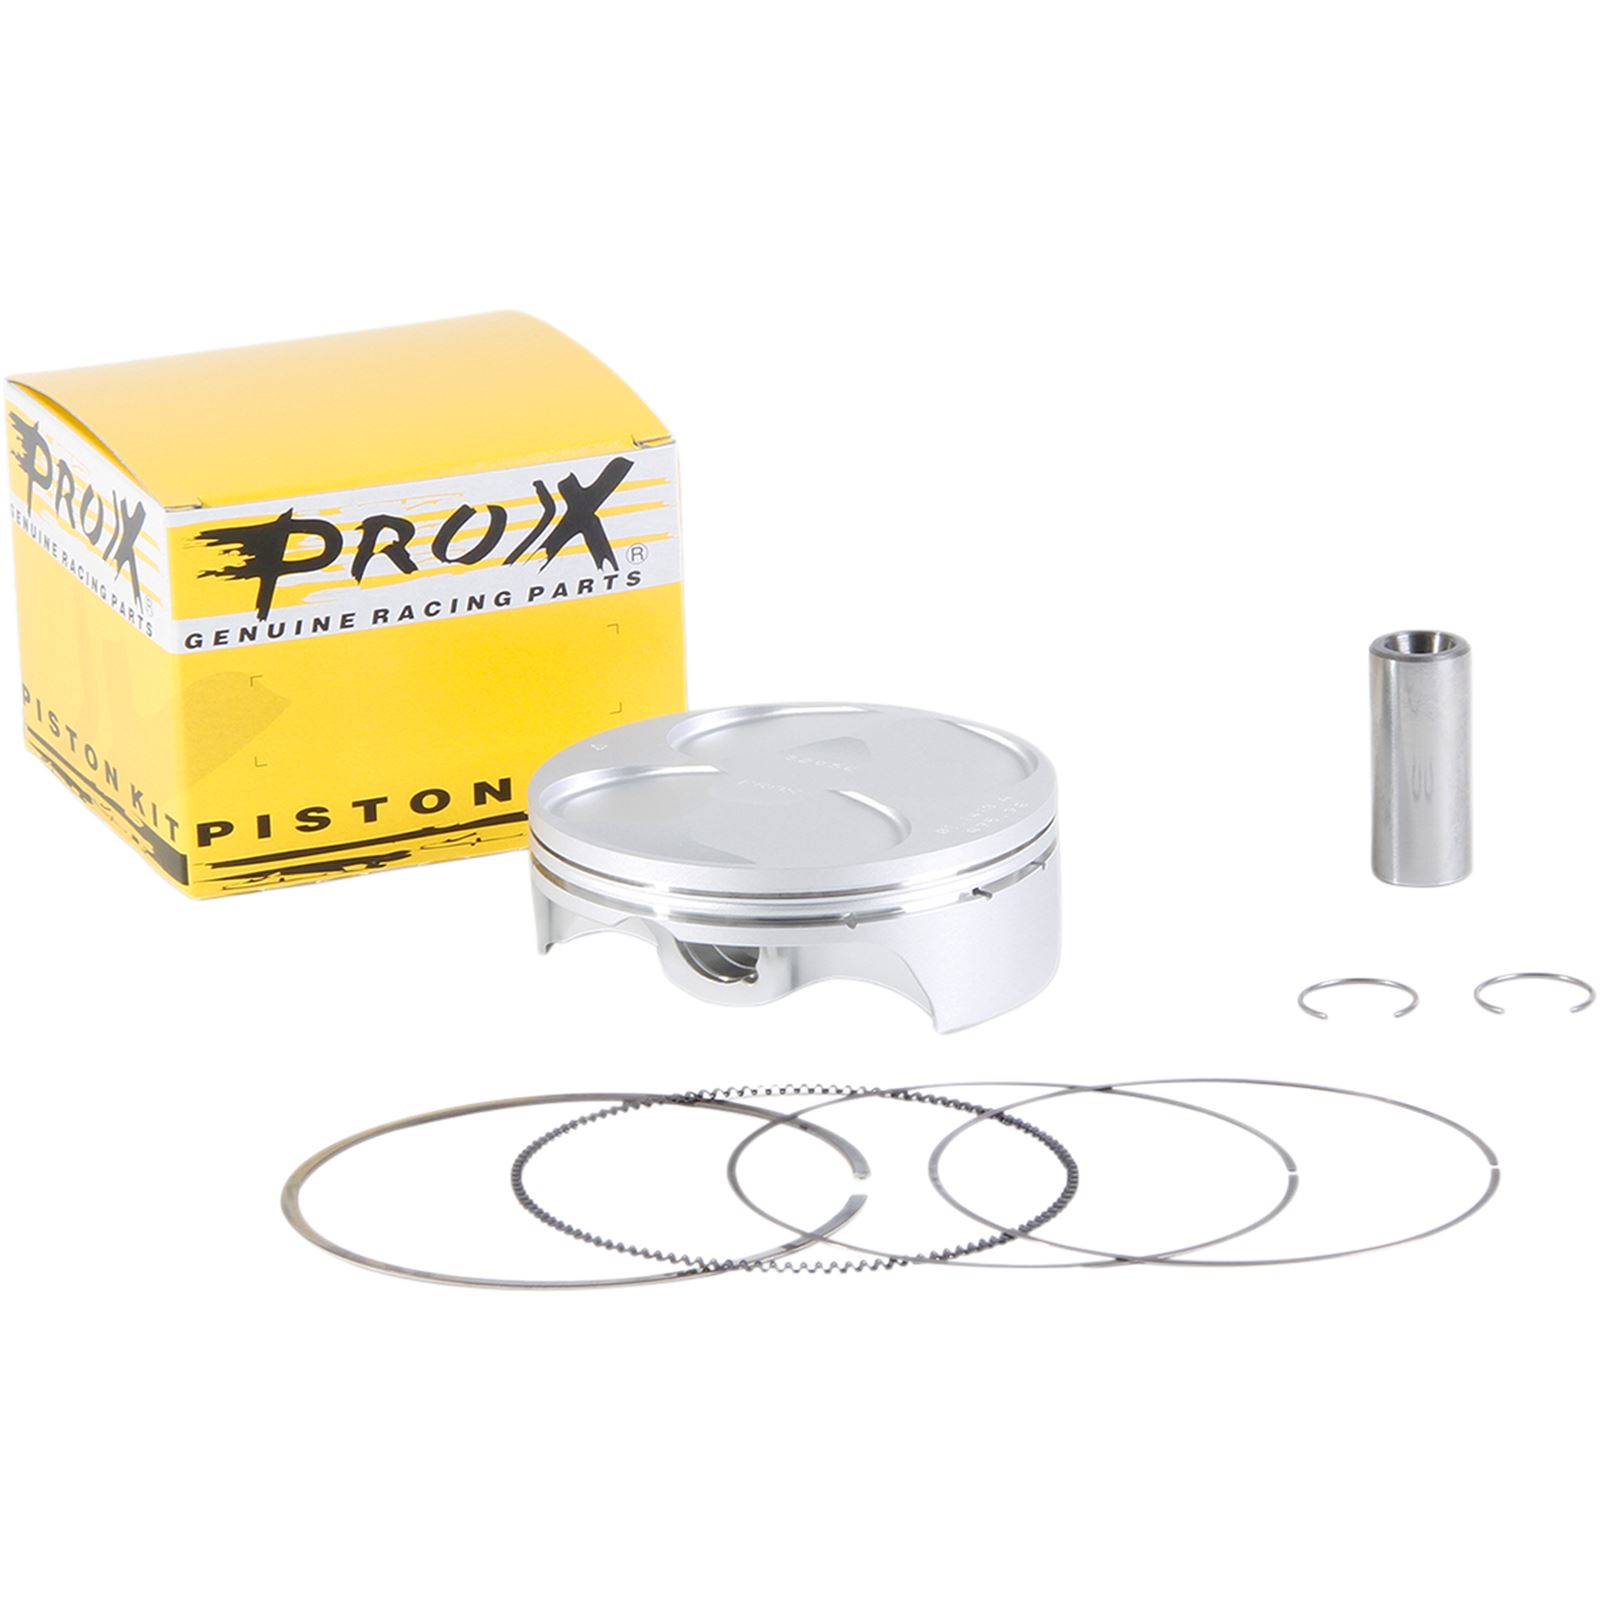 Prox Racing Parts 01.2706.C Piston Kit 